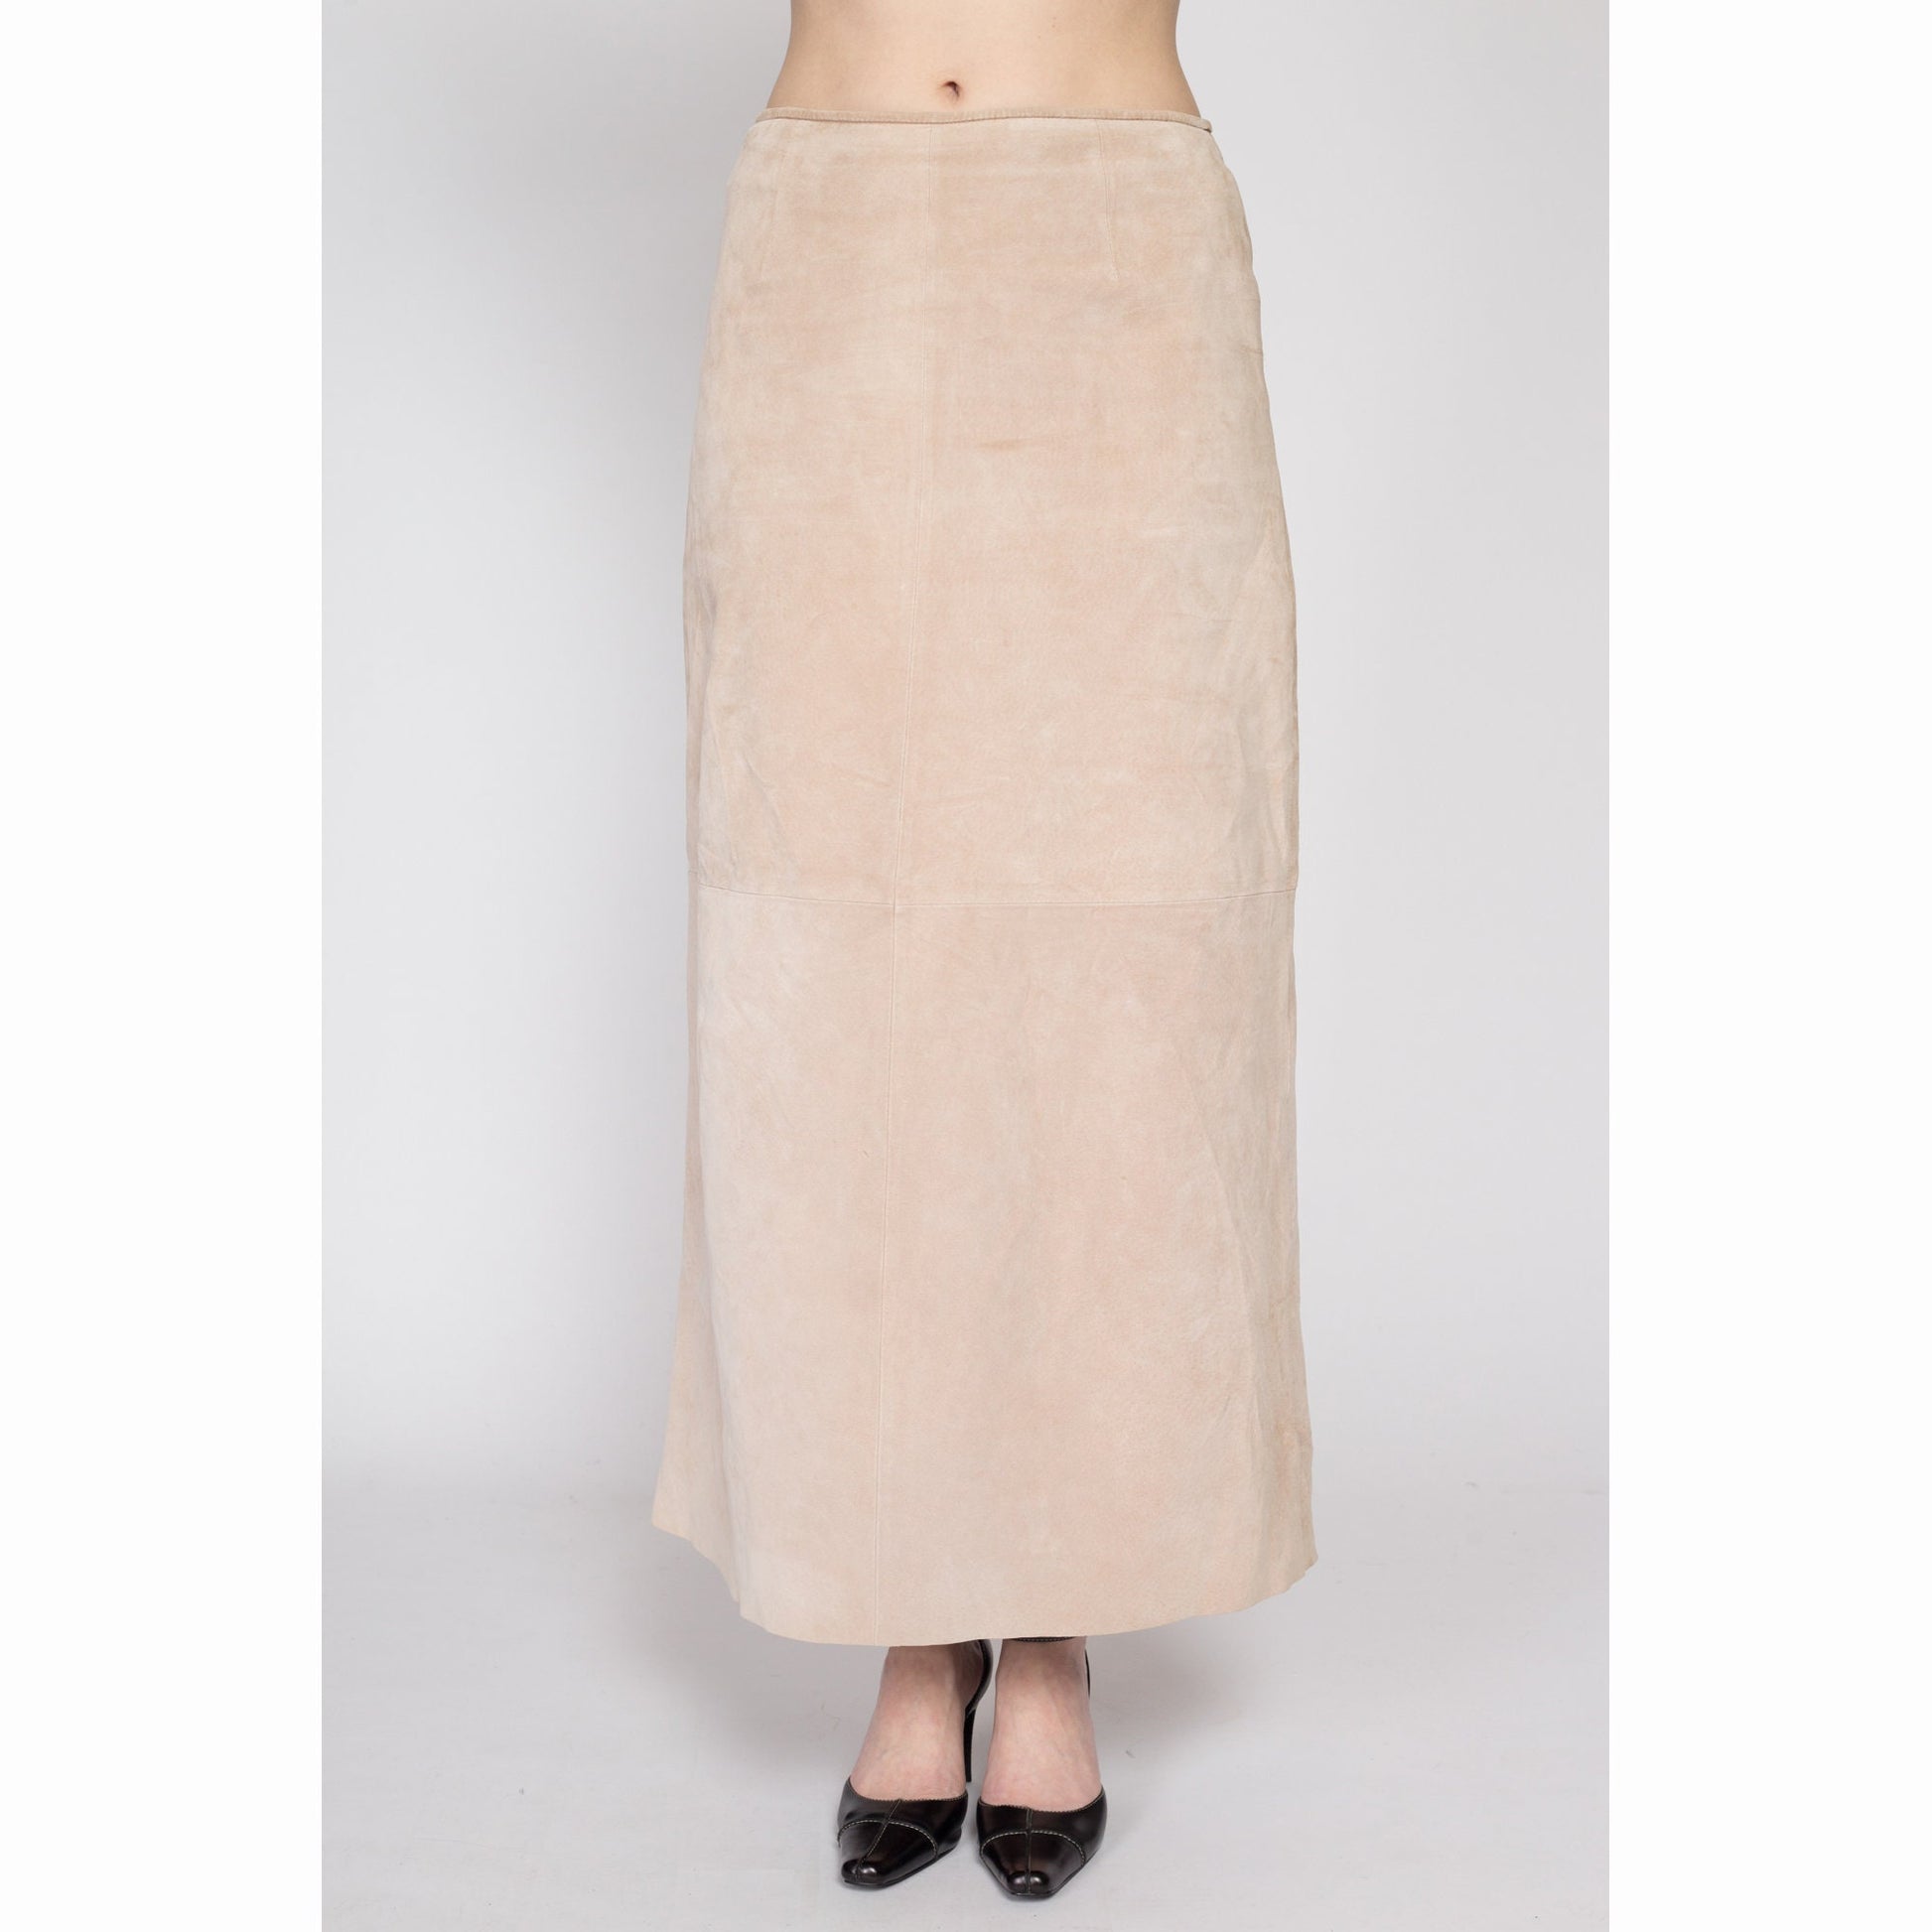 Medium 90s Tan Suede Maxi Skirt 29" | Vintage Boho Leather High Waisted Minimalist Western Skirt